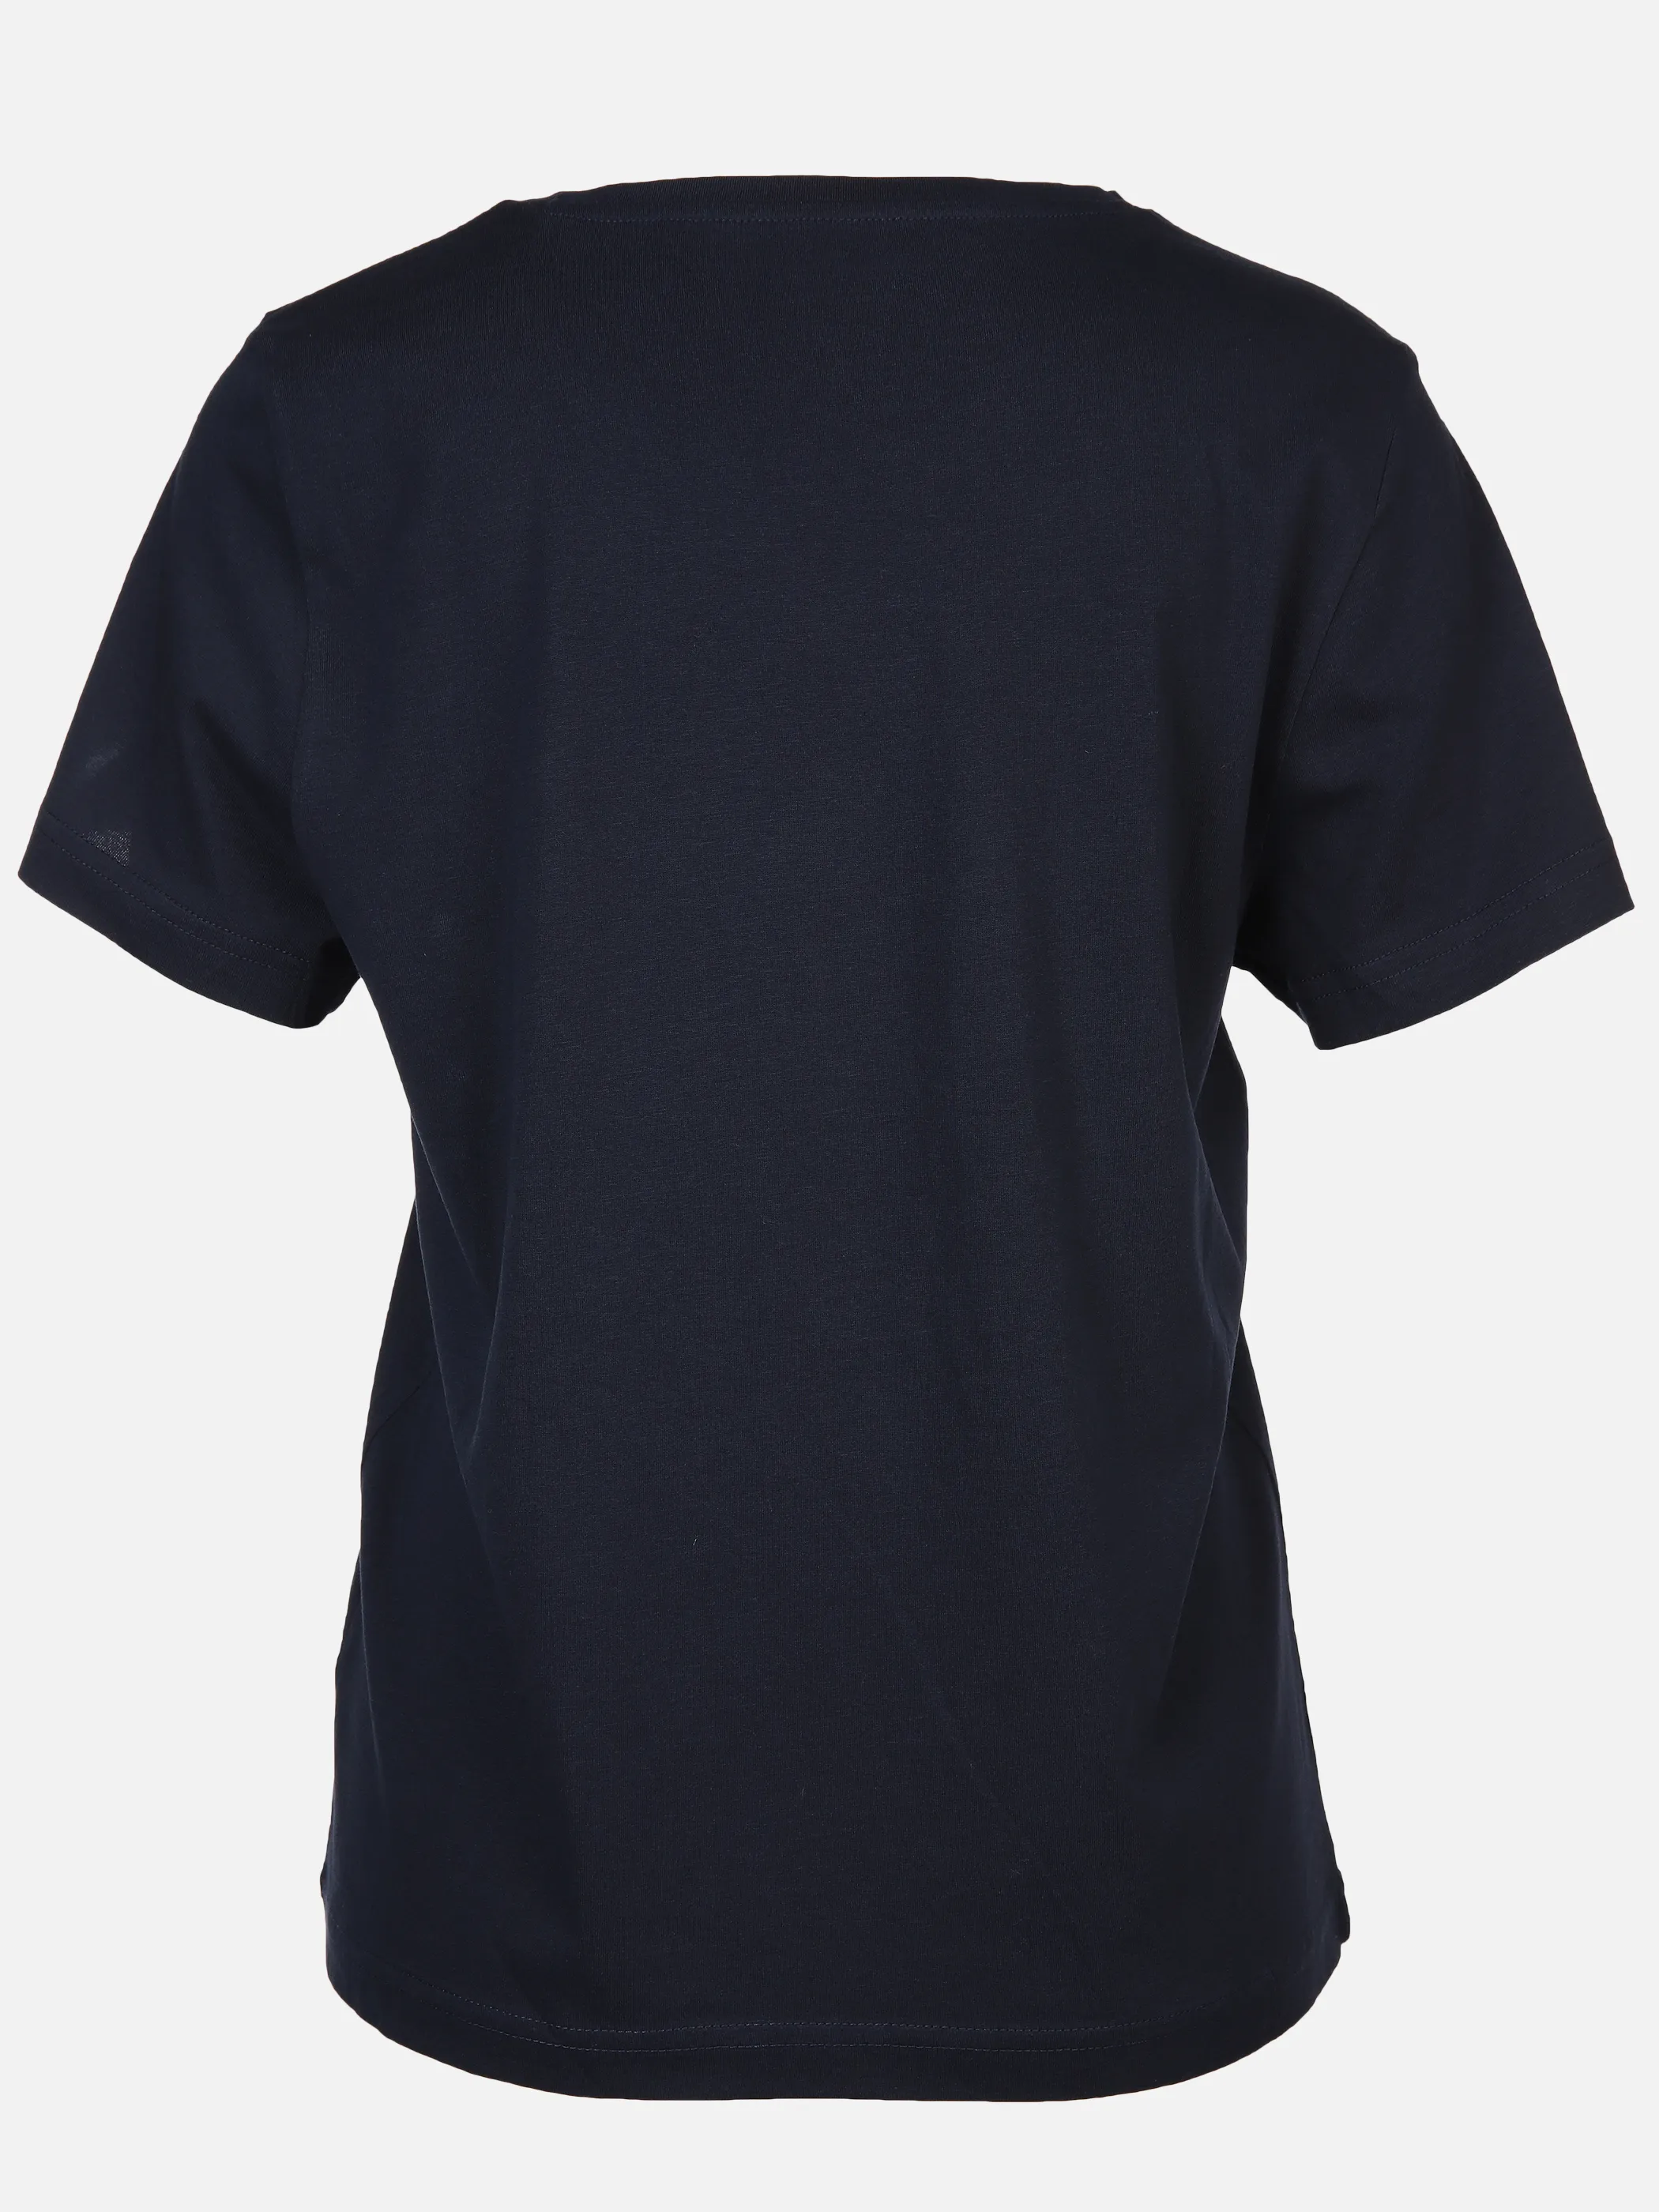 Tom Tailor 1040544 NOS T-shirt crew neck print Blau 890588 10360 2